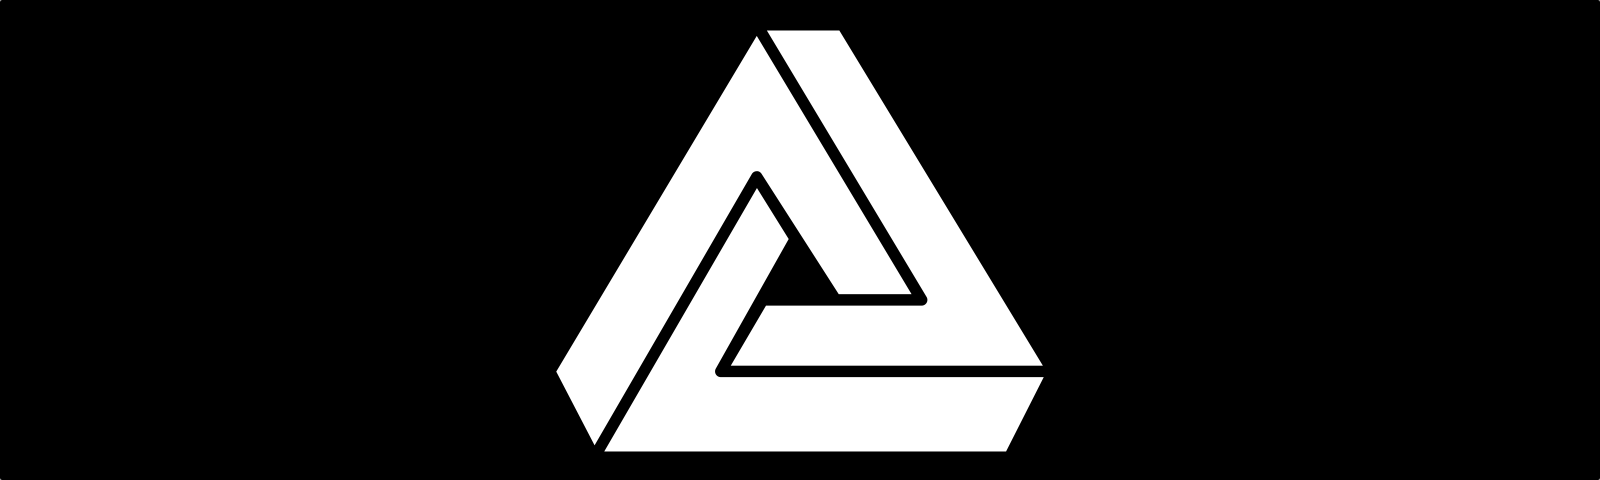 Our Logo. The Penrose Triangle.